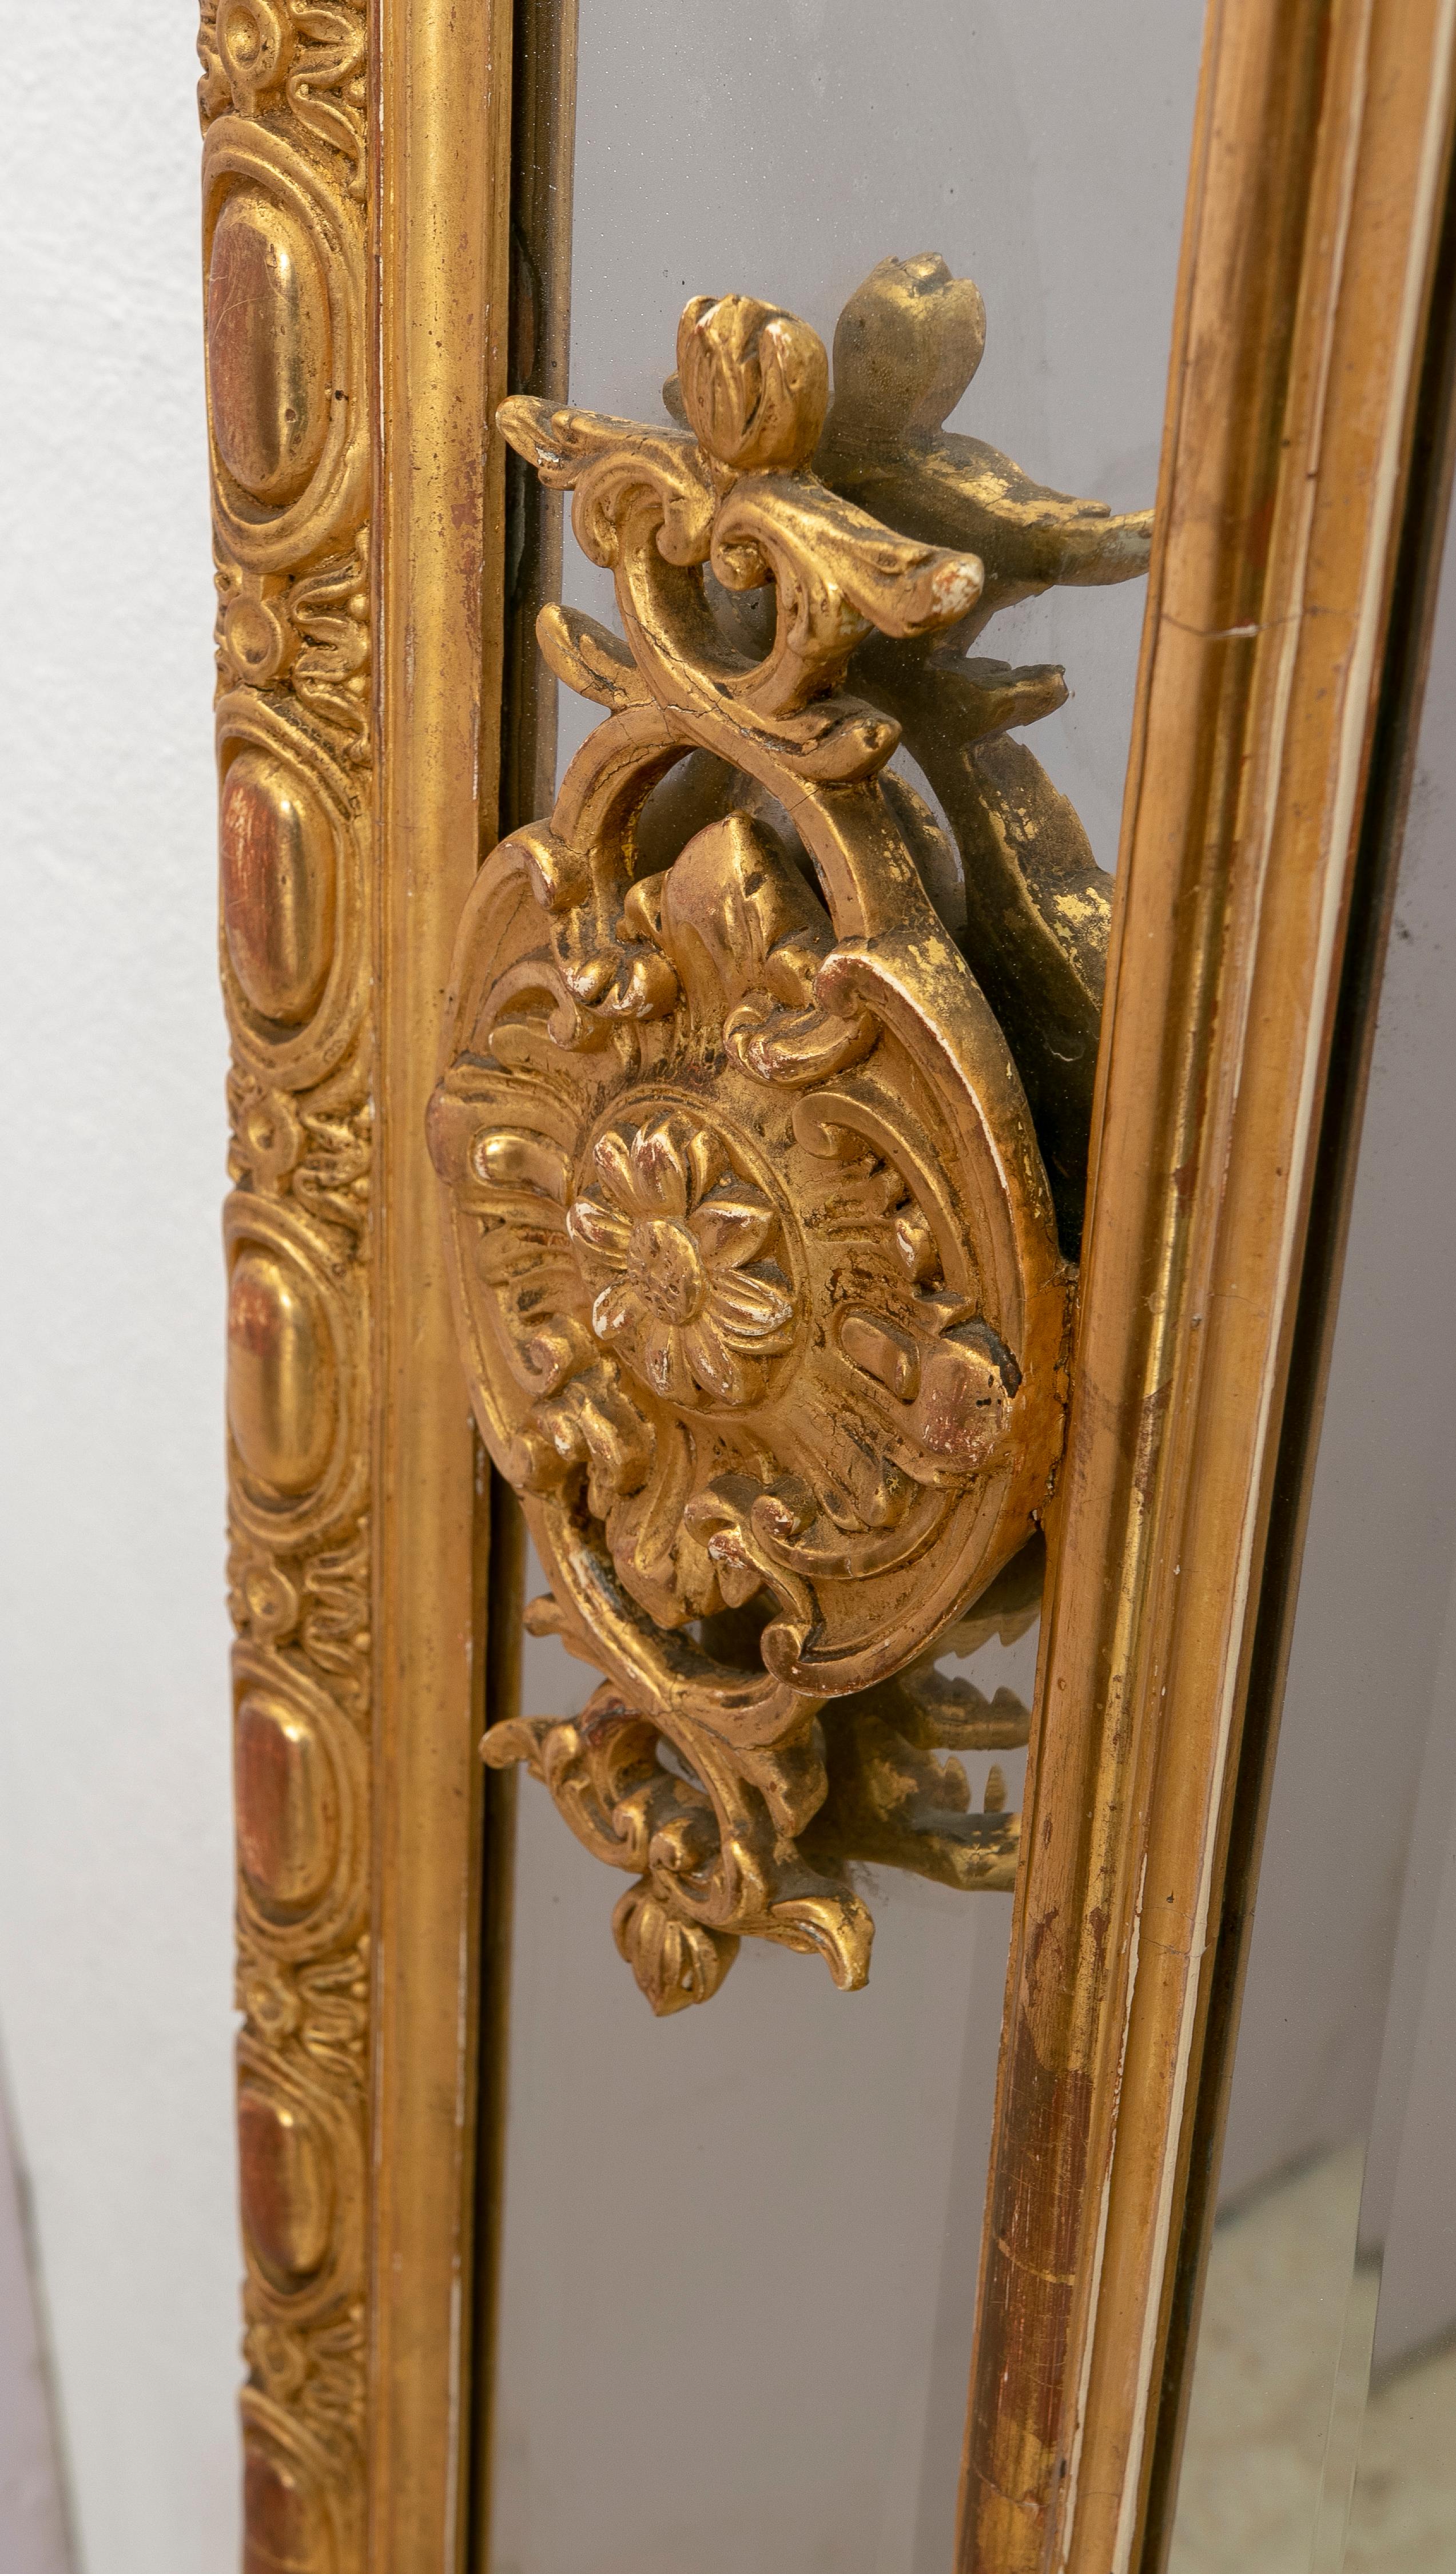 1850s French Gold Giltwood Wall Mirror w/ Acanthus Leaf Scrolls Decoration 5